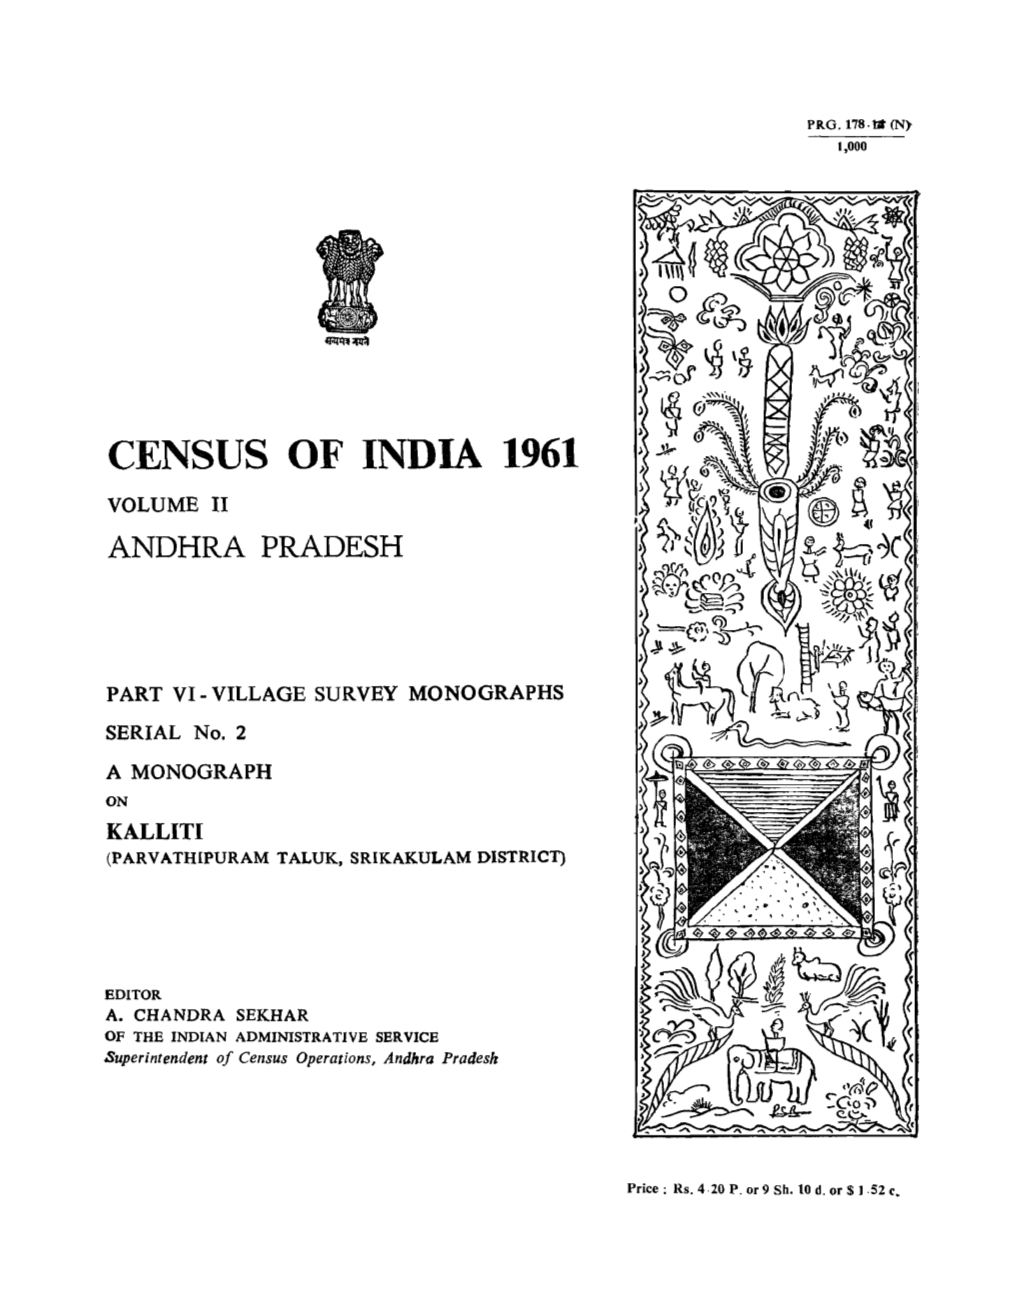 Village Survey Monographs, Kalliti, No-2, Part VI, Vol-II, Andhra Pradesh